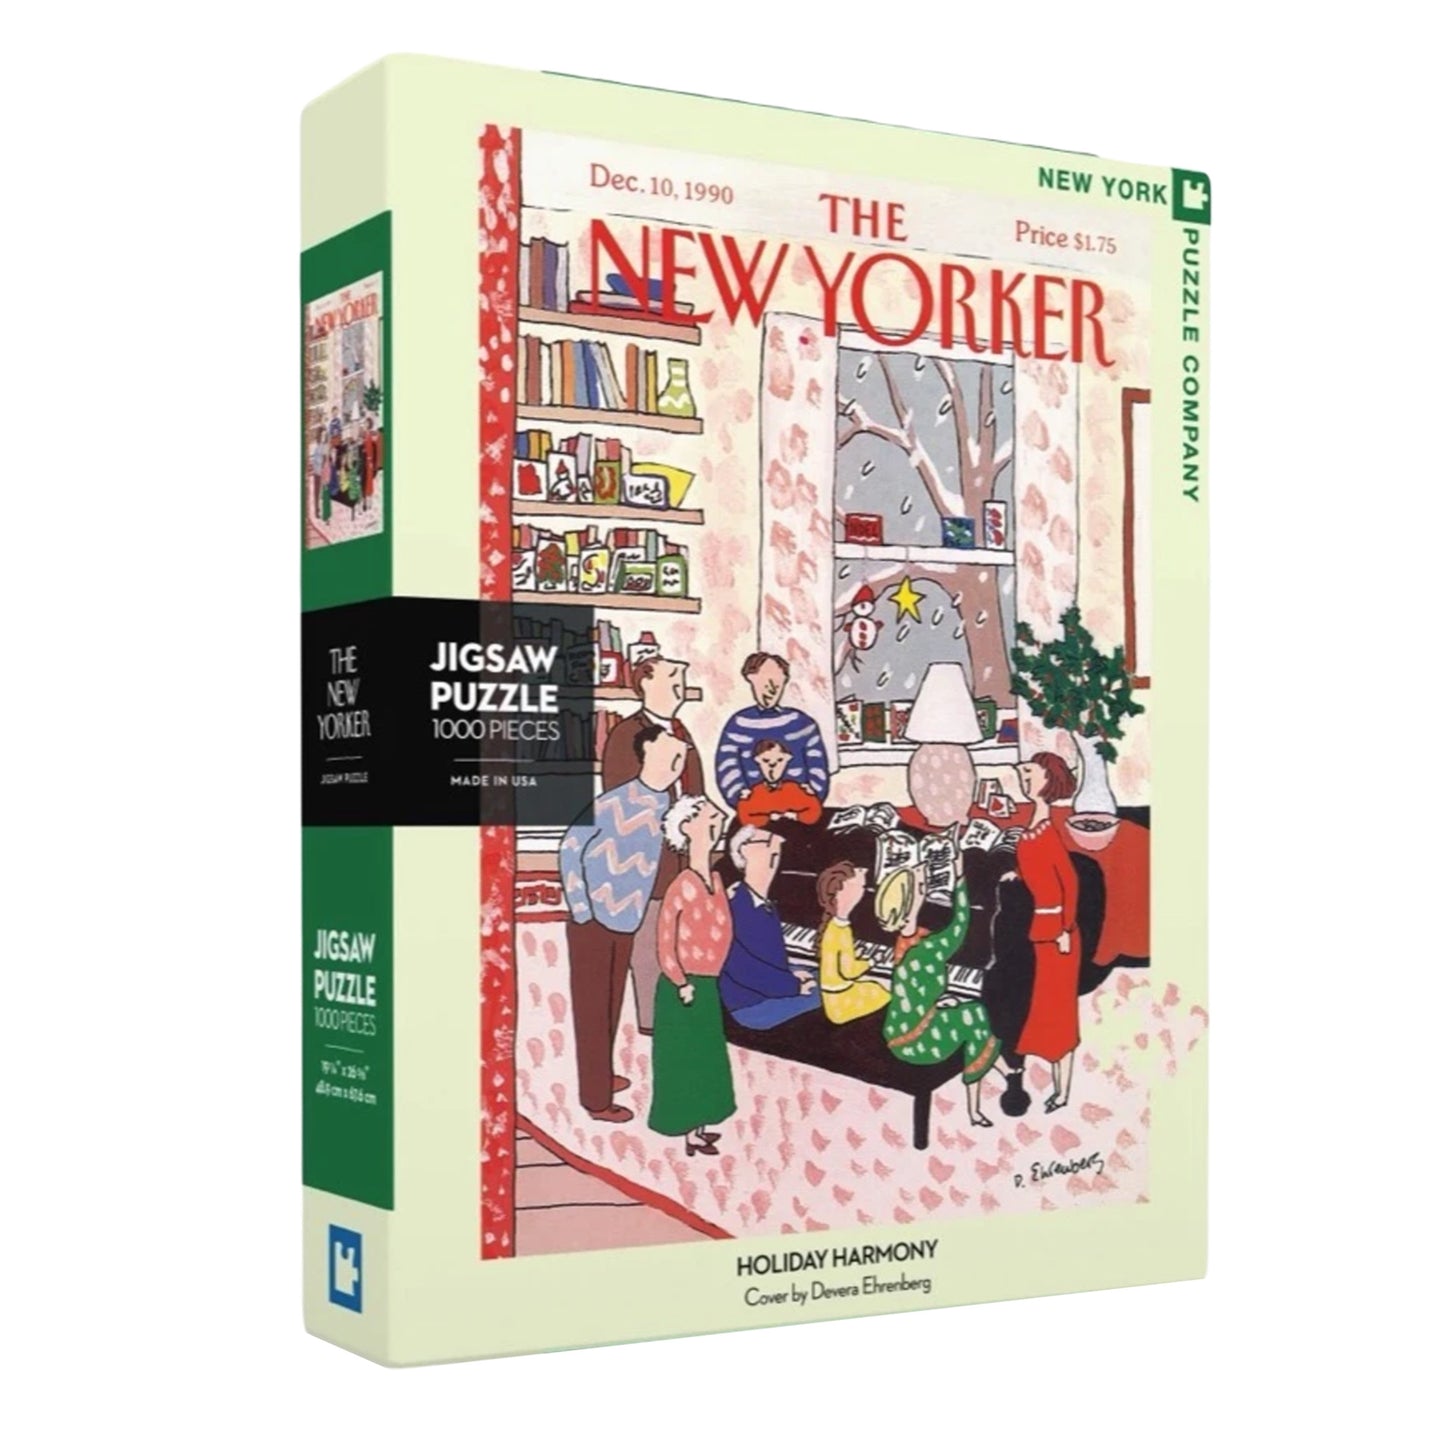 The New Yorker, Holiday Harmony Puzzle